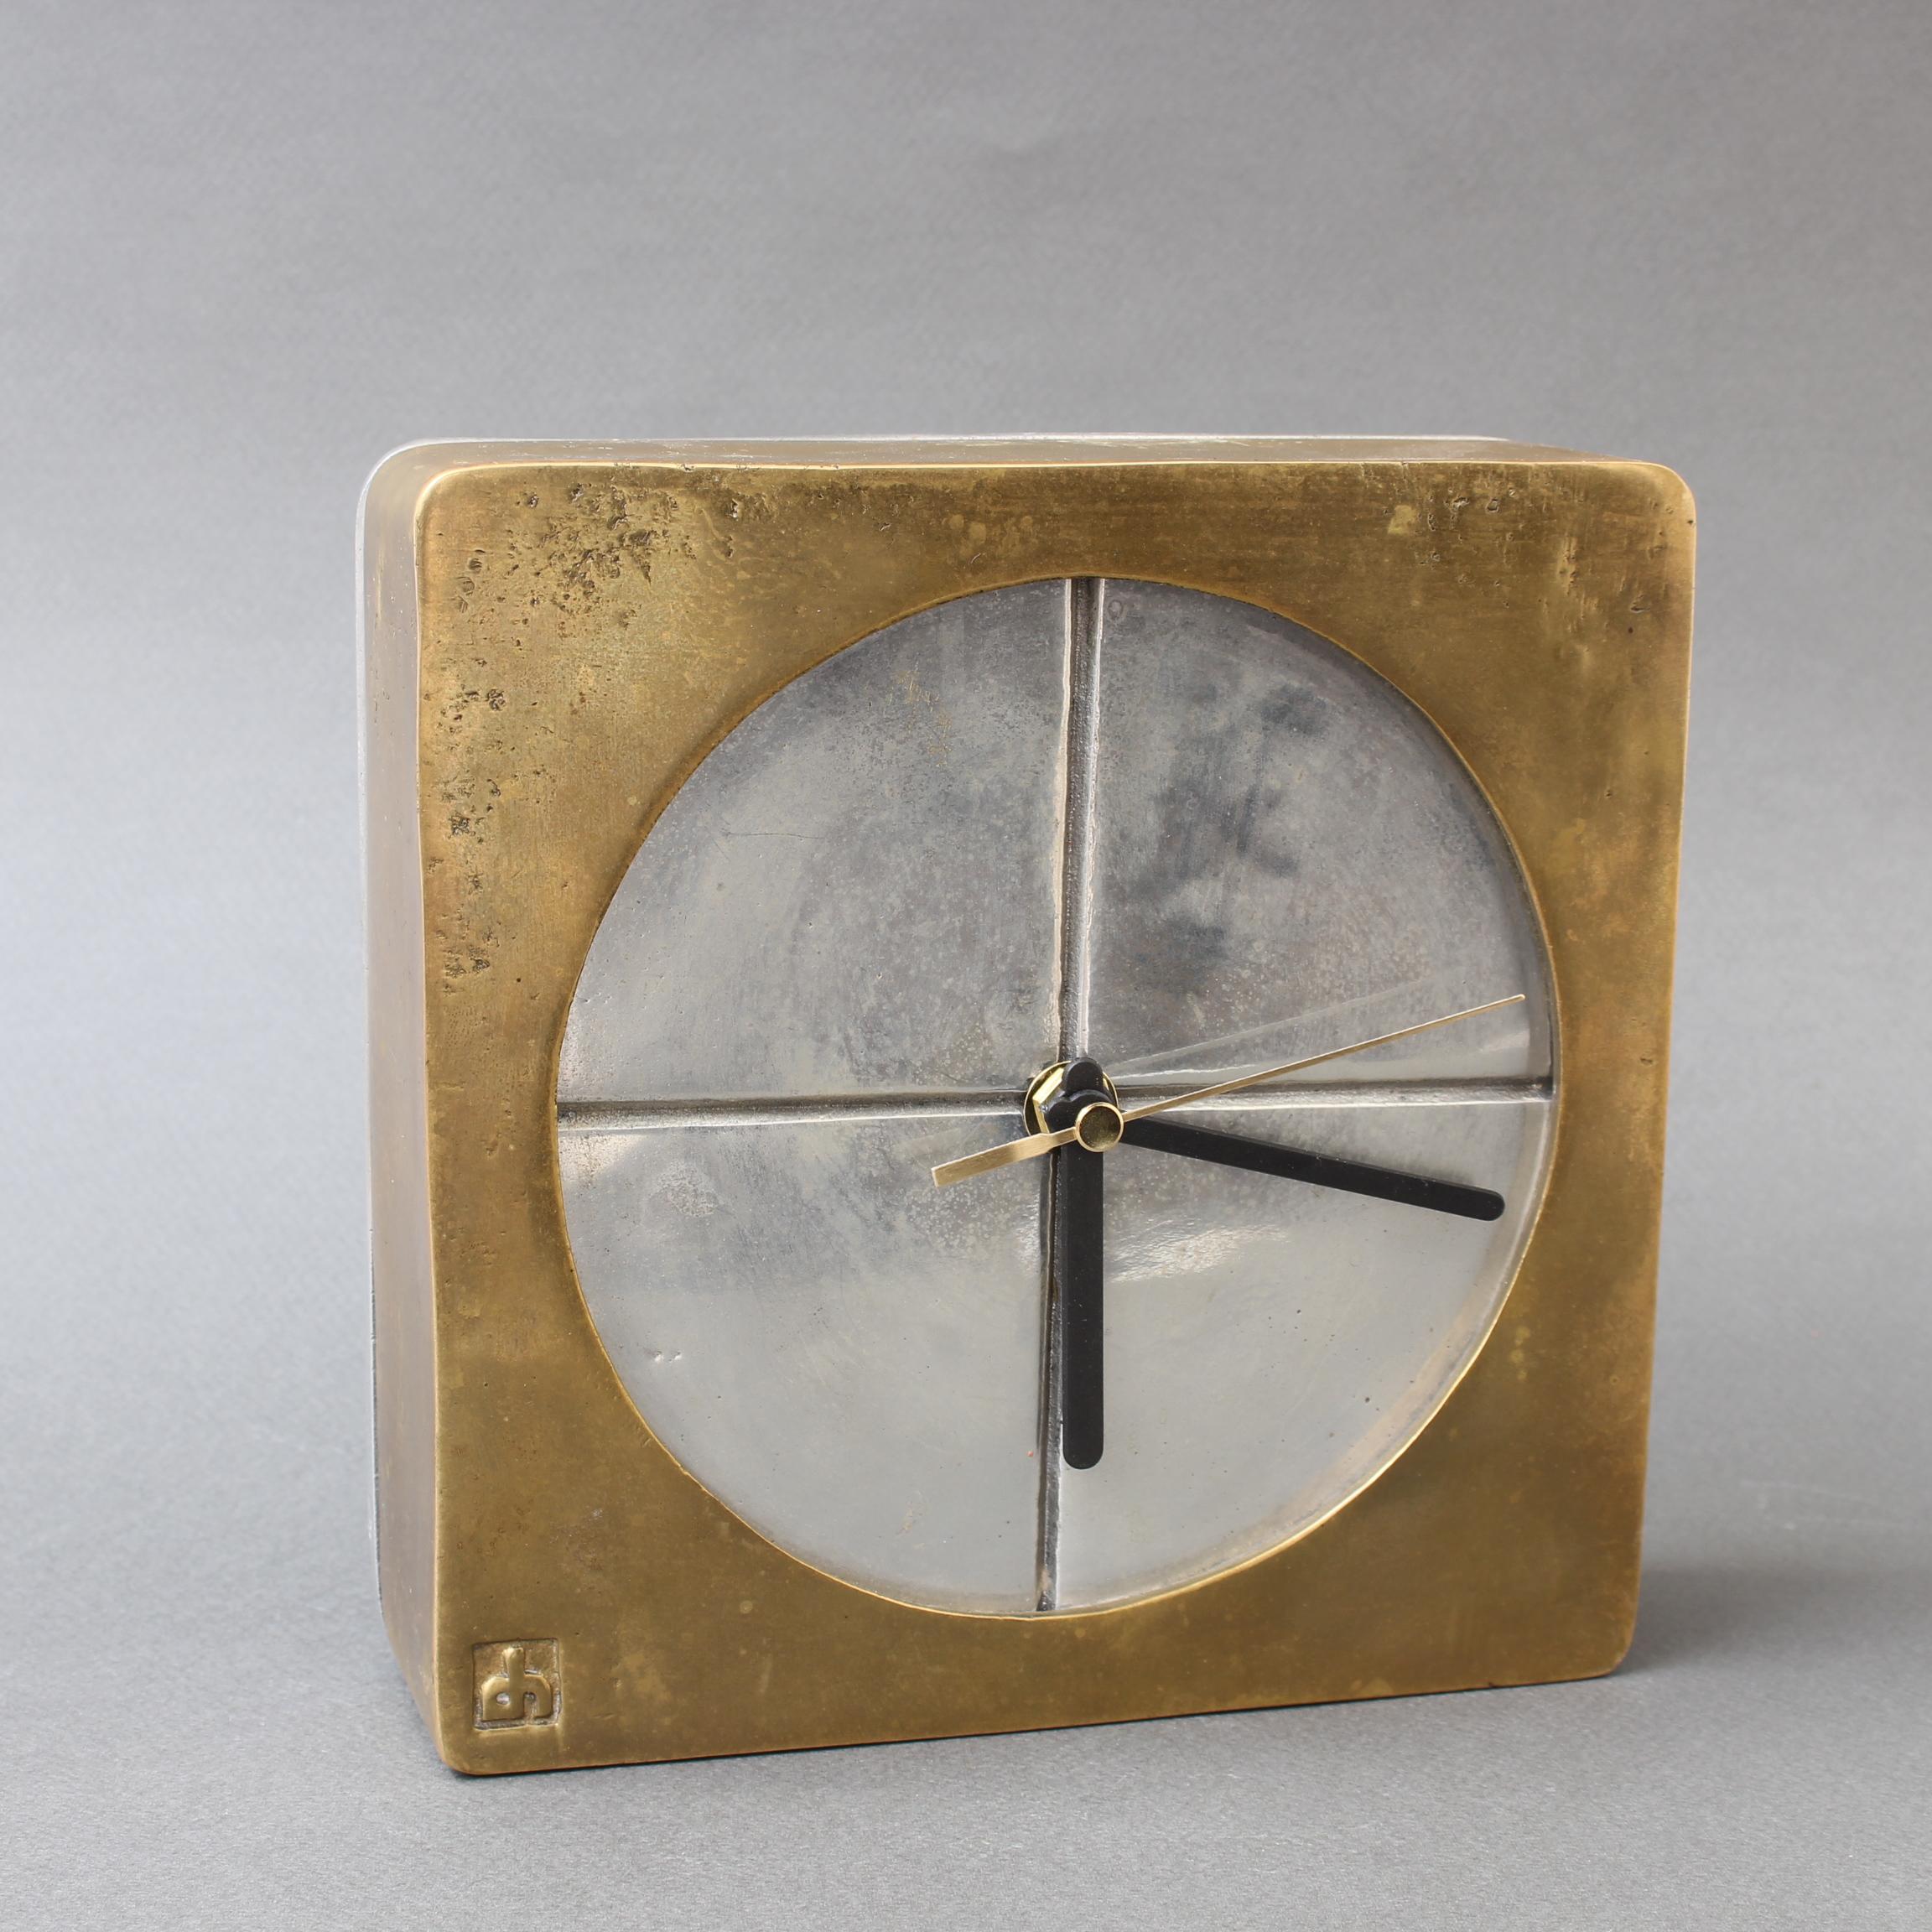 Aluminum Brutalist Aluminium and Brass Decorative Clock by David Marshall, circa 1980s